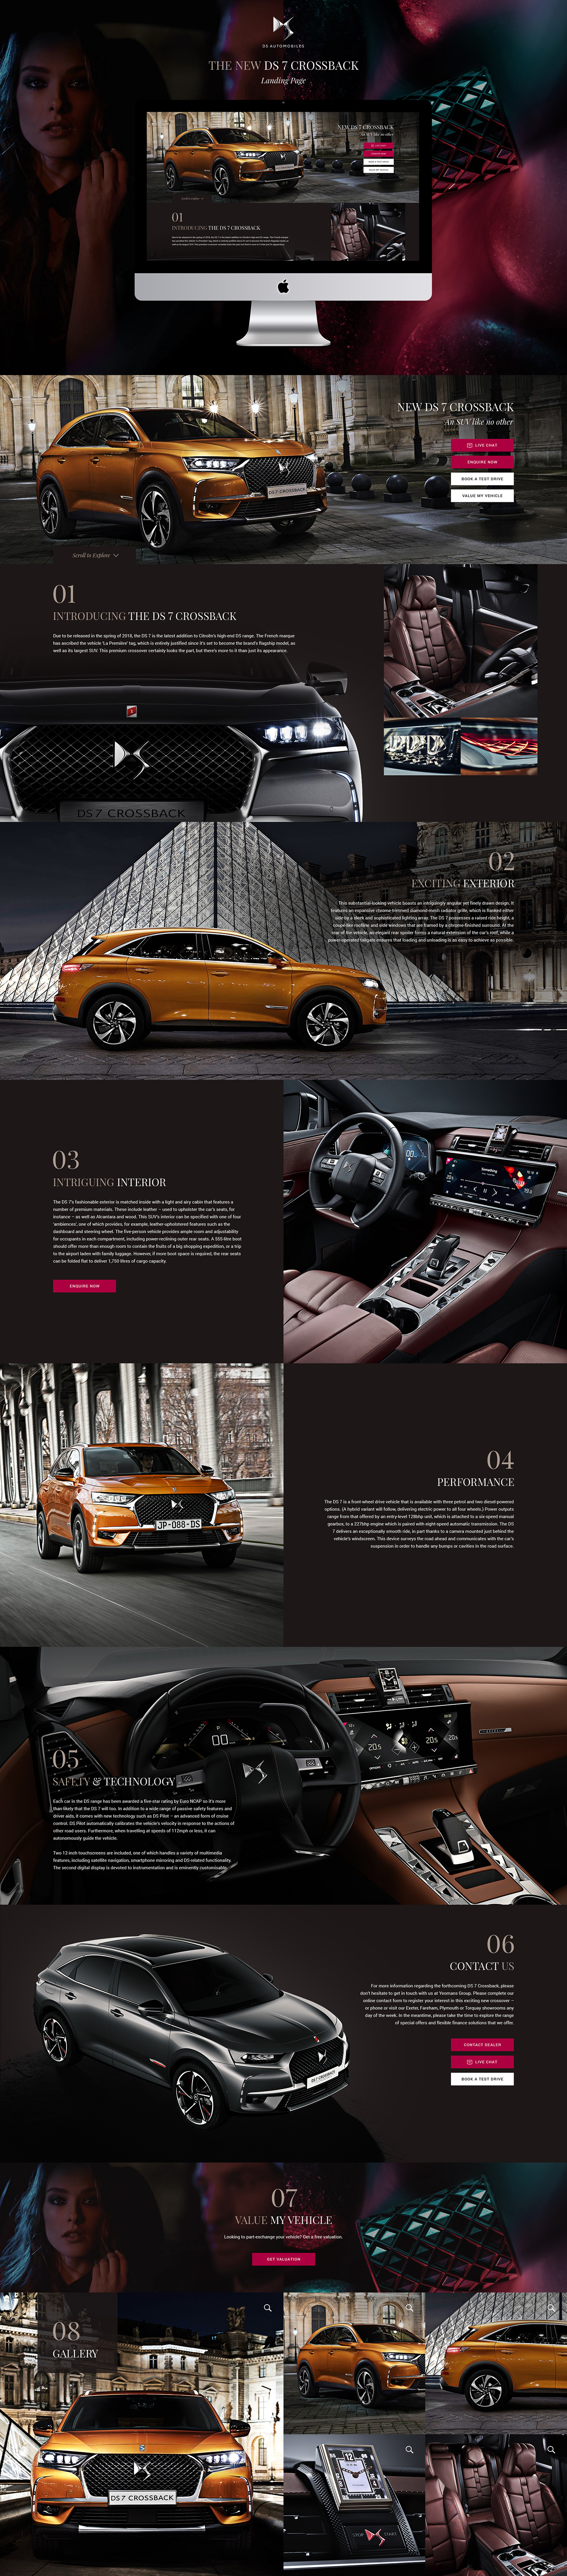 DS 7 Crossback landing page Auto Website car mock up Responsive Design Dekstop